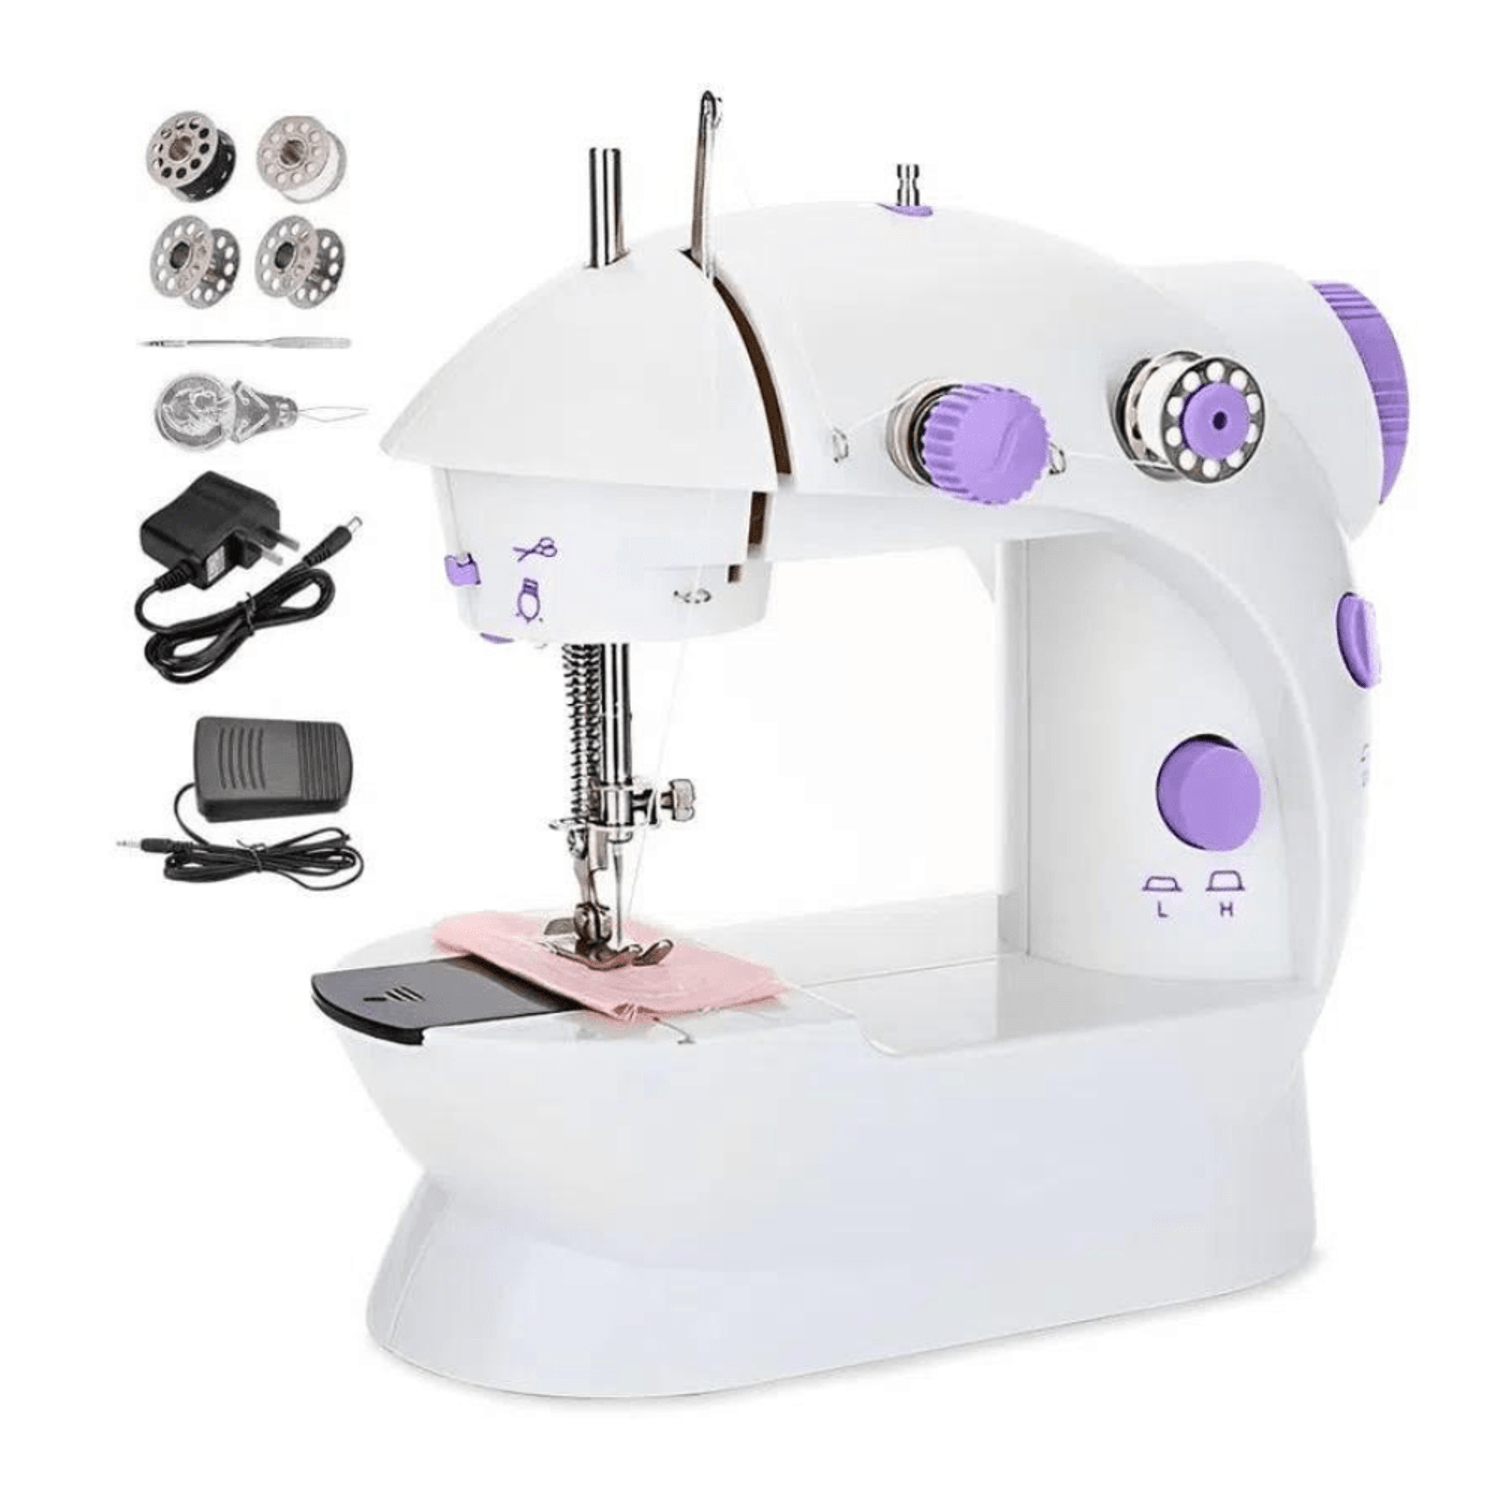 Maquina de coser portatil mini electrica blanca GENERICO